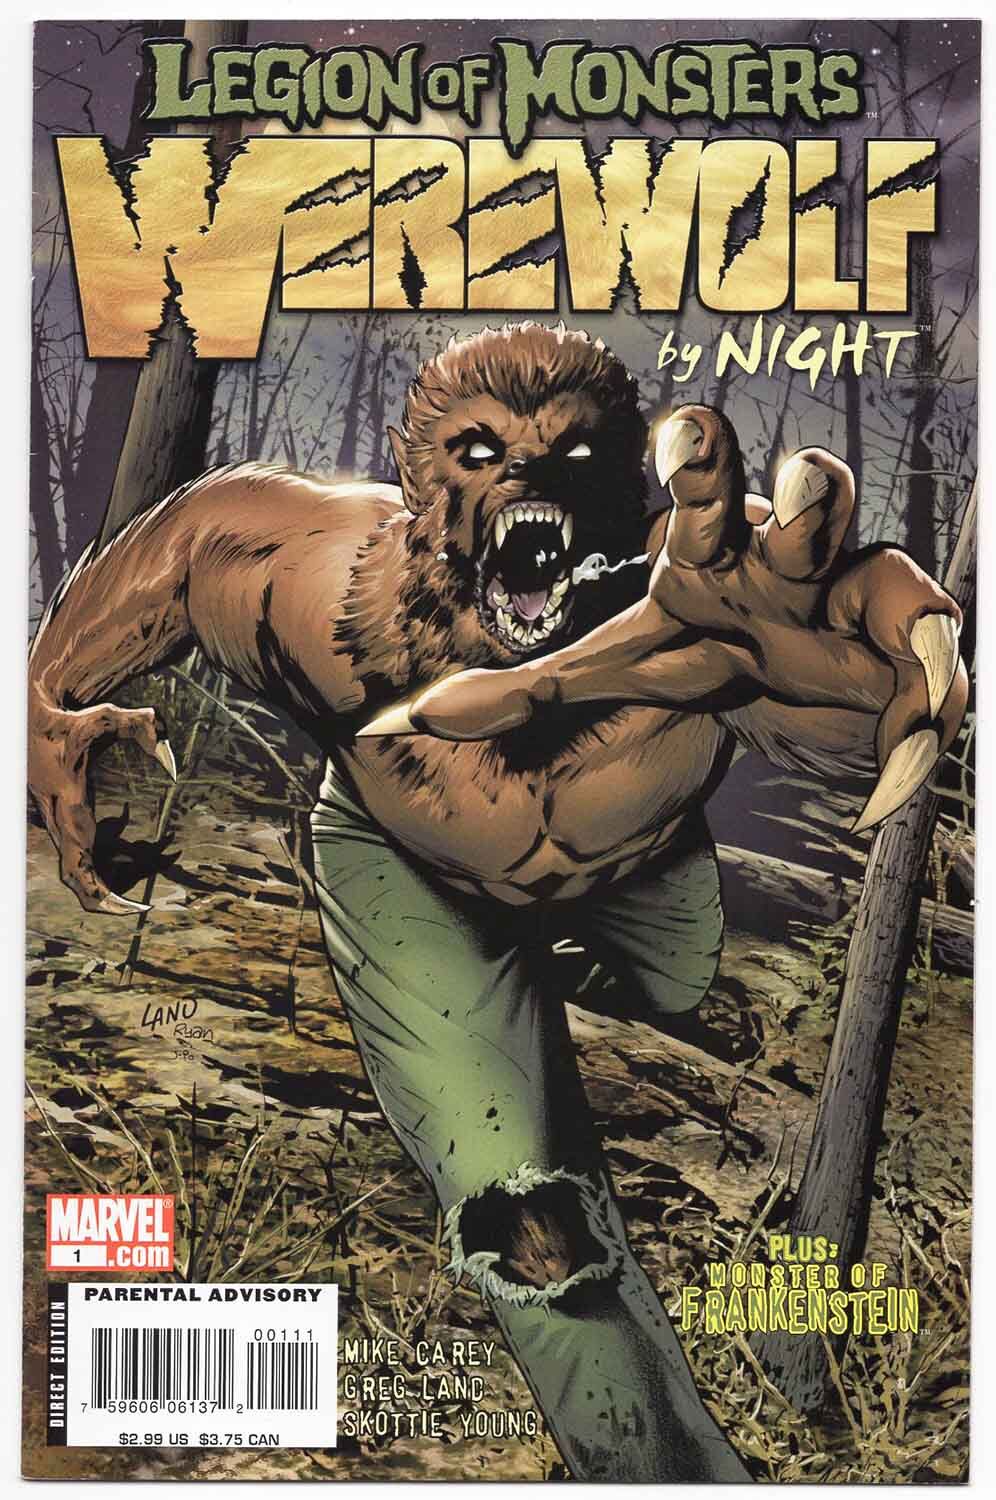 Legion of Monsters Werewolf by Night #1